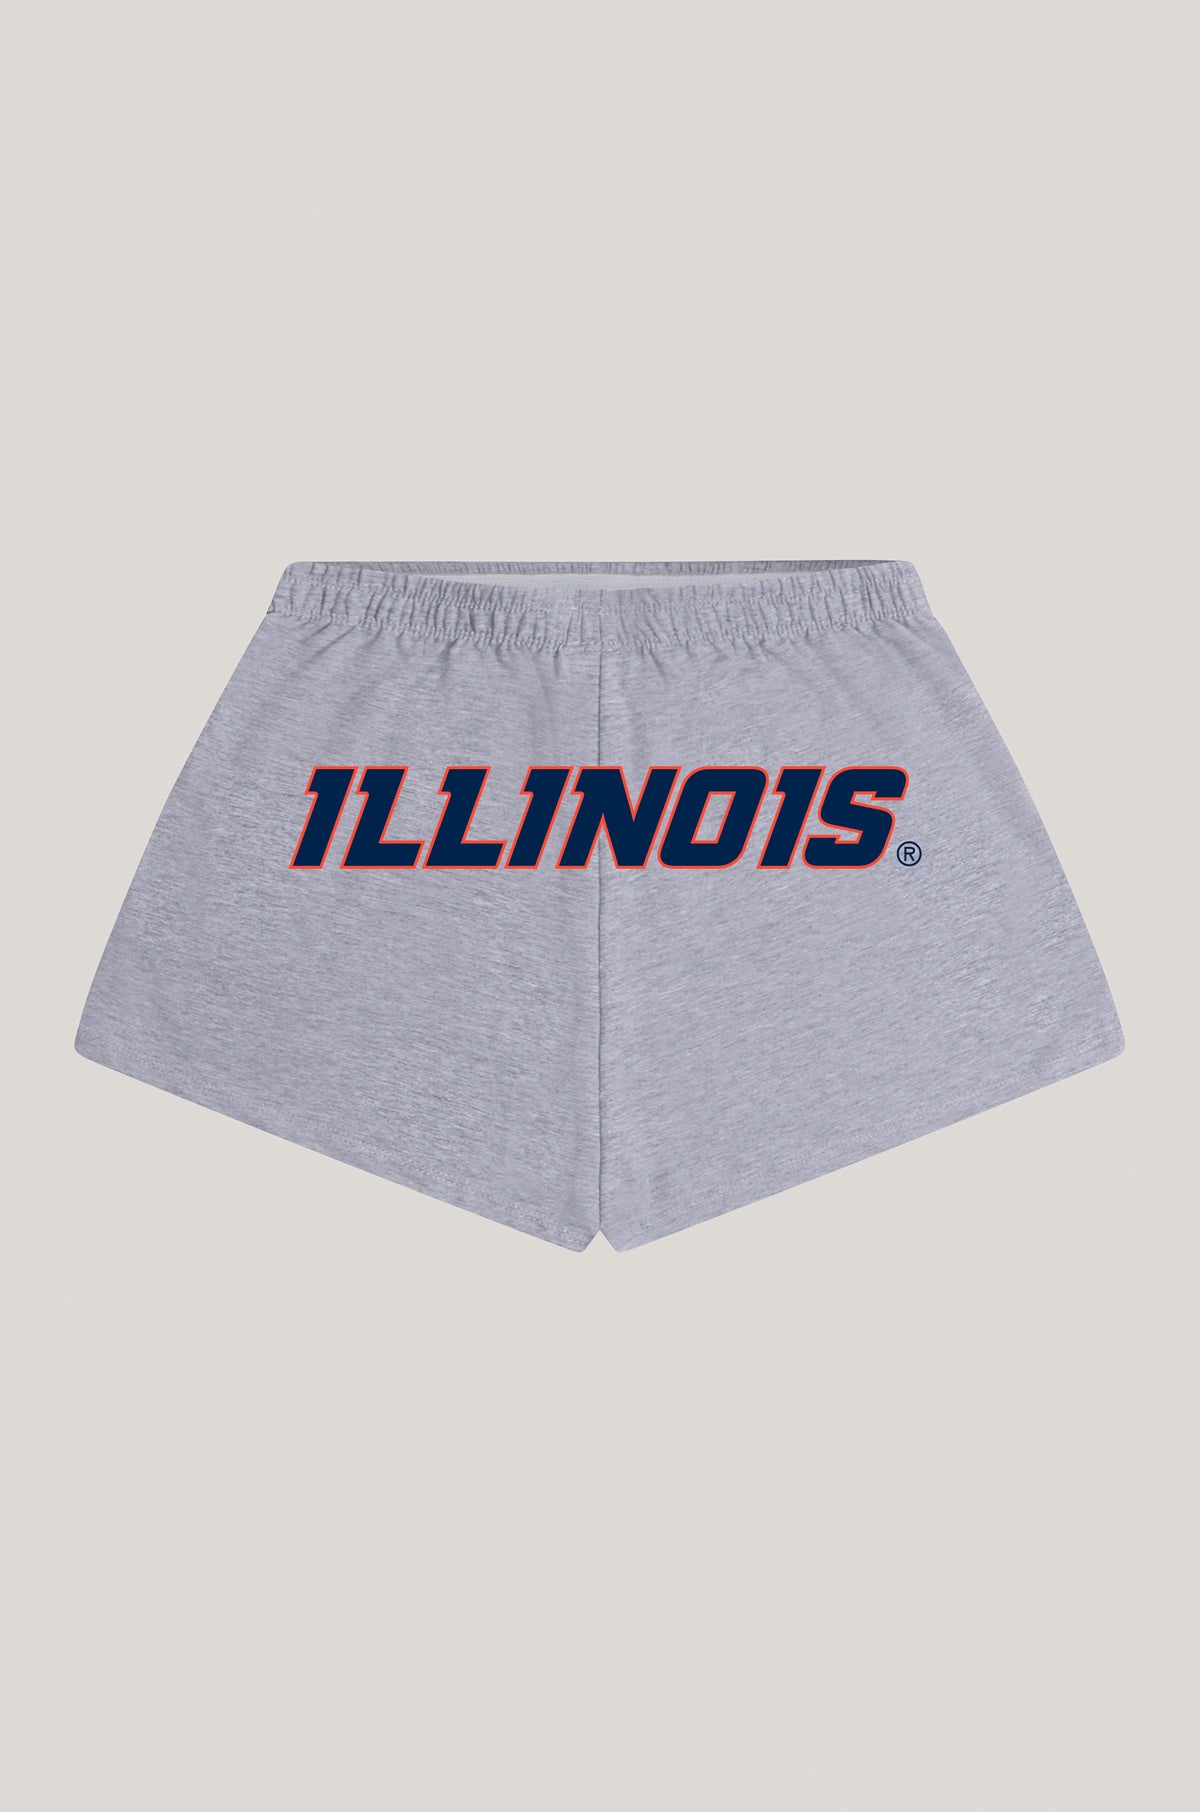 University of Illinois P.E. Shorts